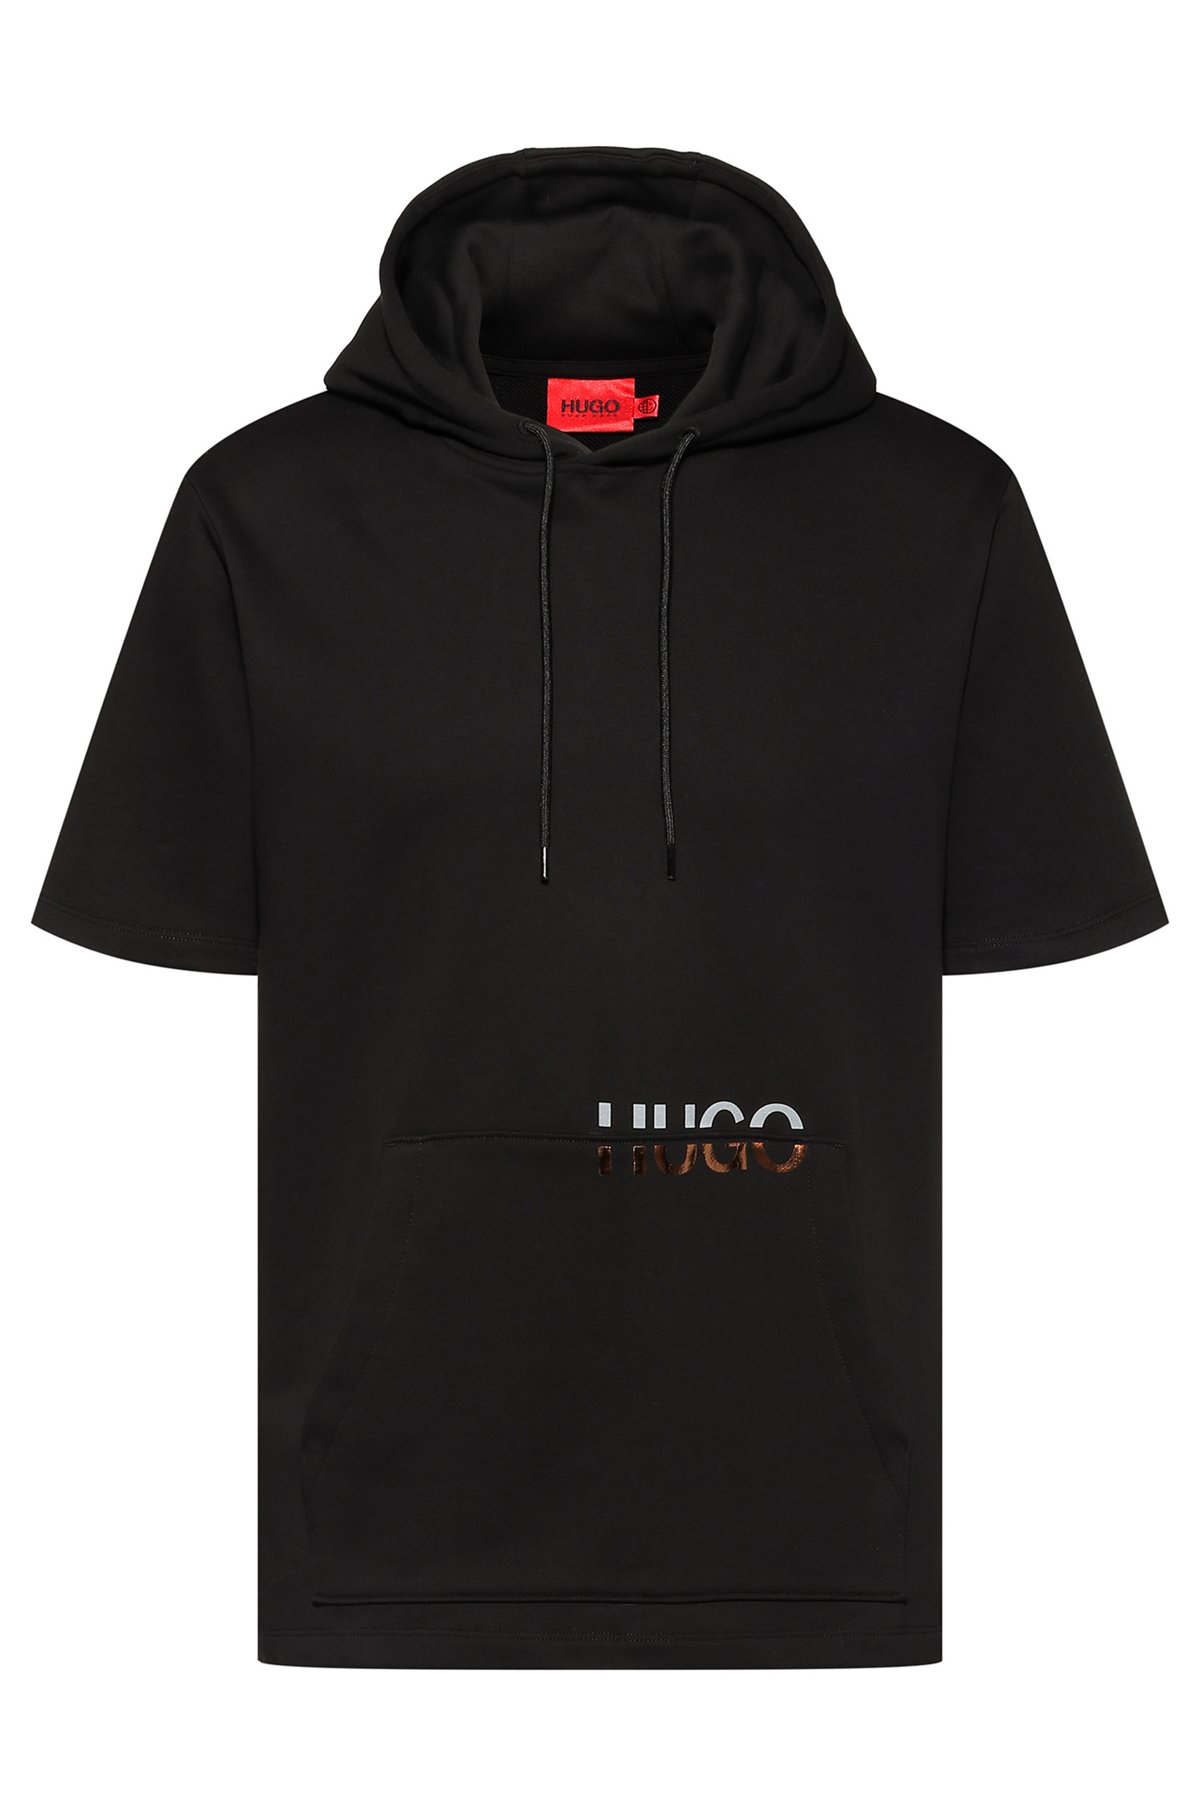 HUGO - Short-sleeved hooded sweatshirt